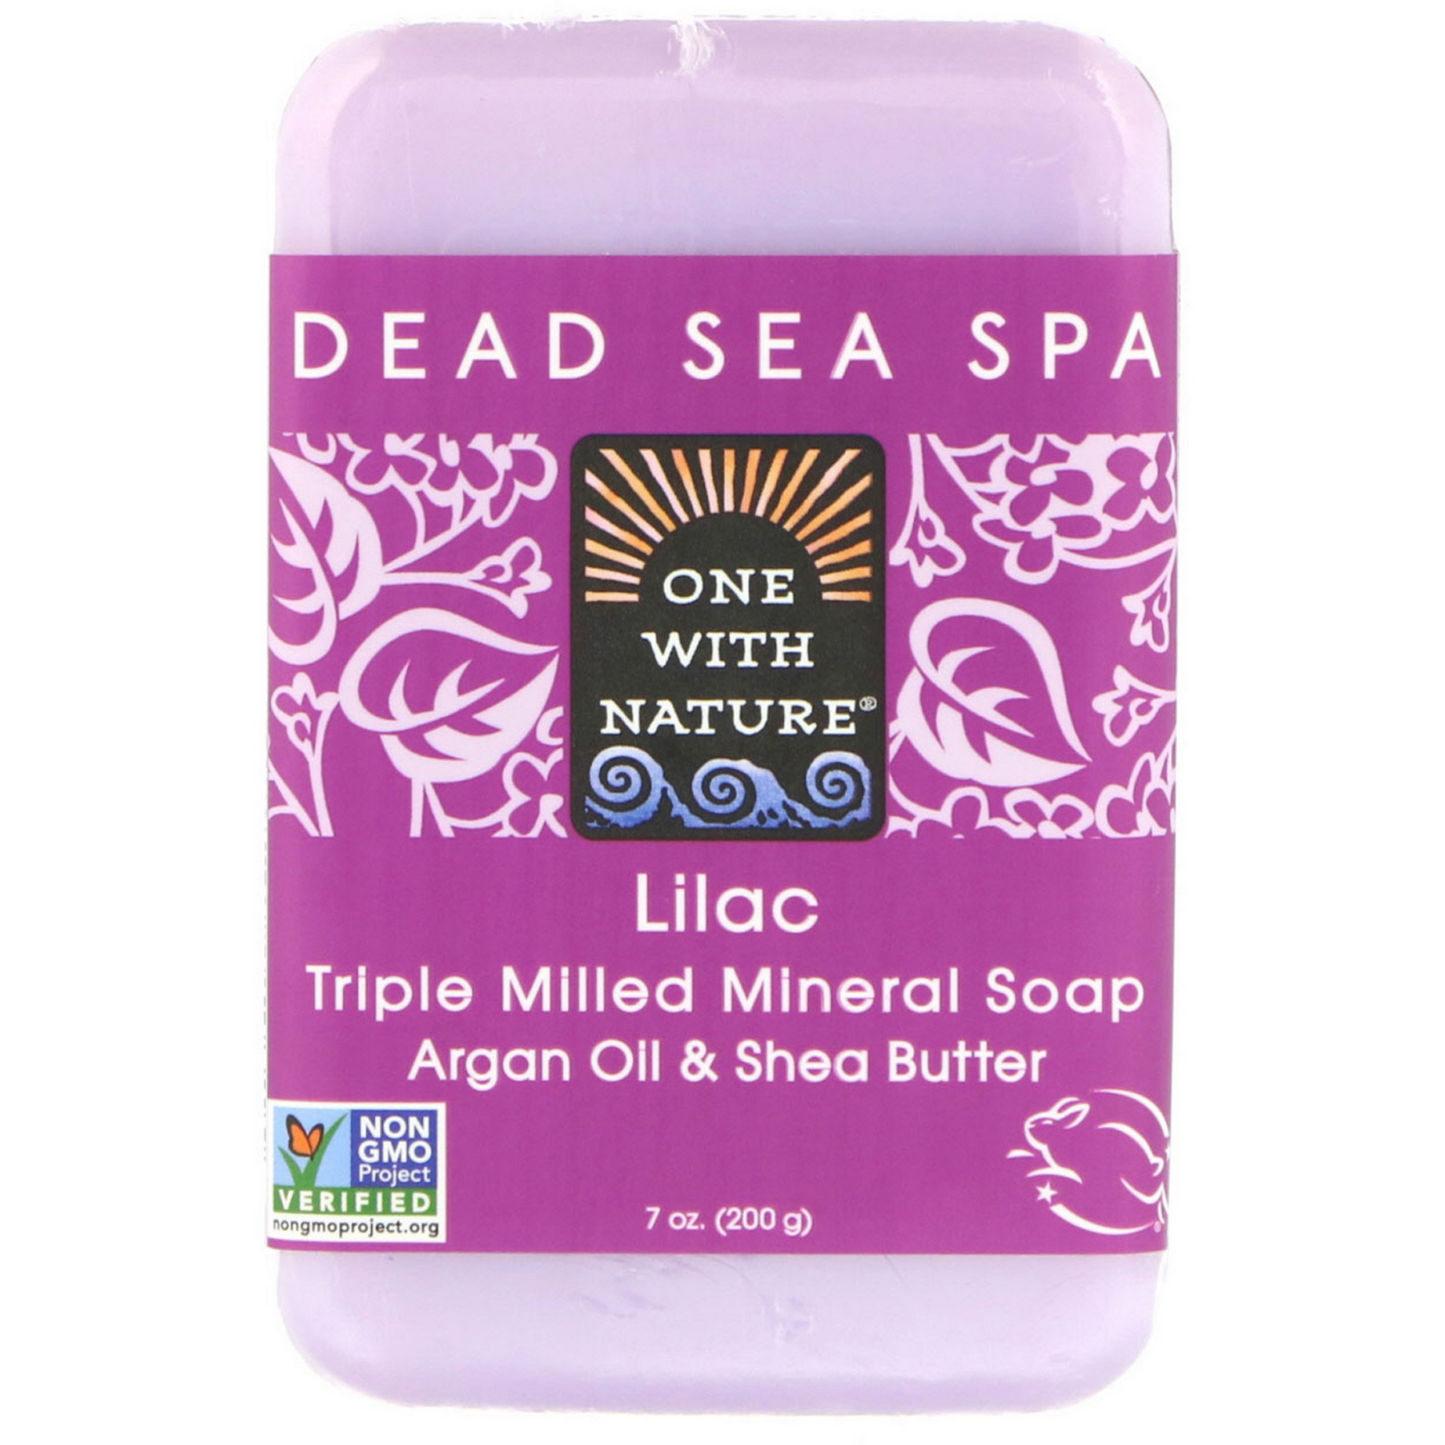 Primary Image of Dead Sea Mineral Soap - Lilac